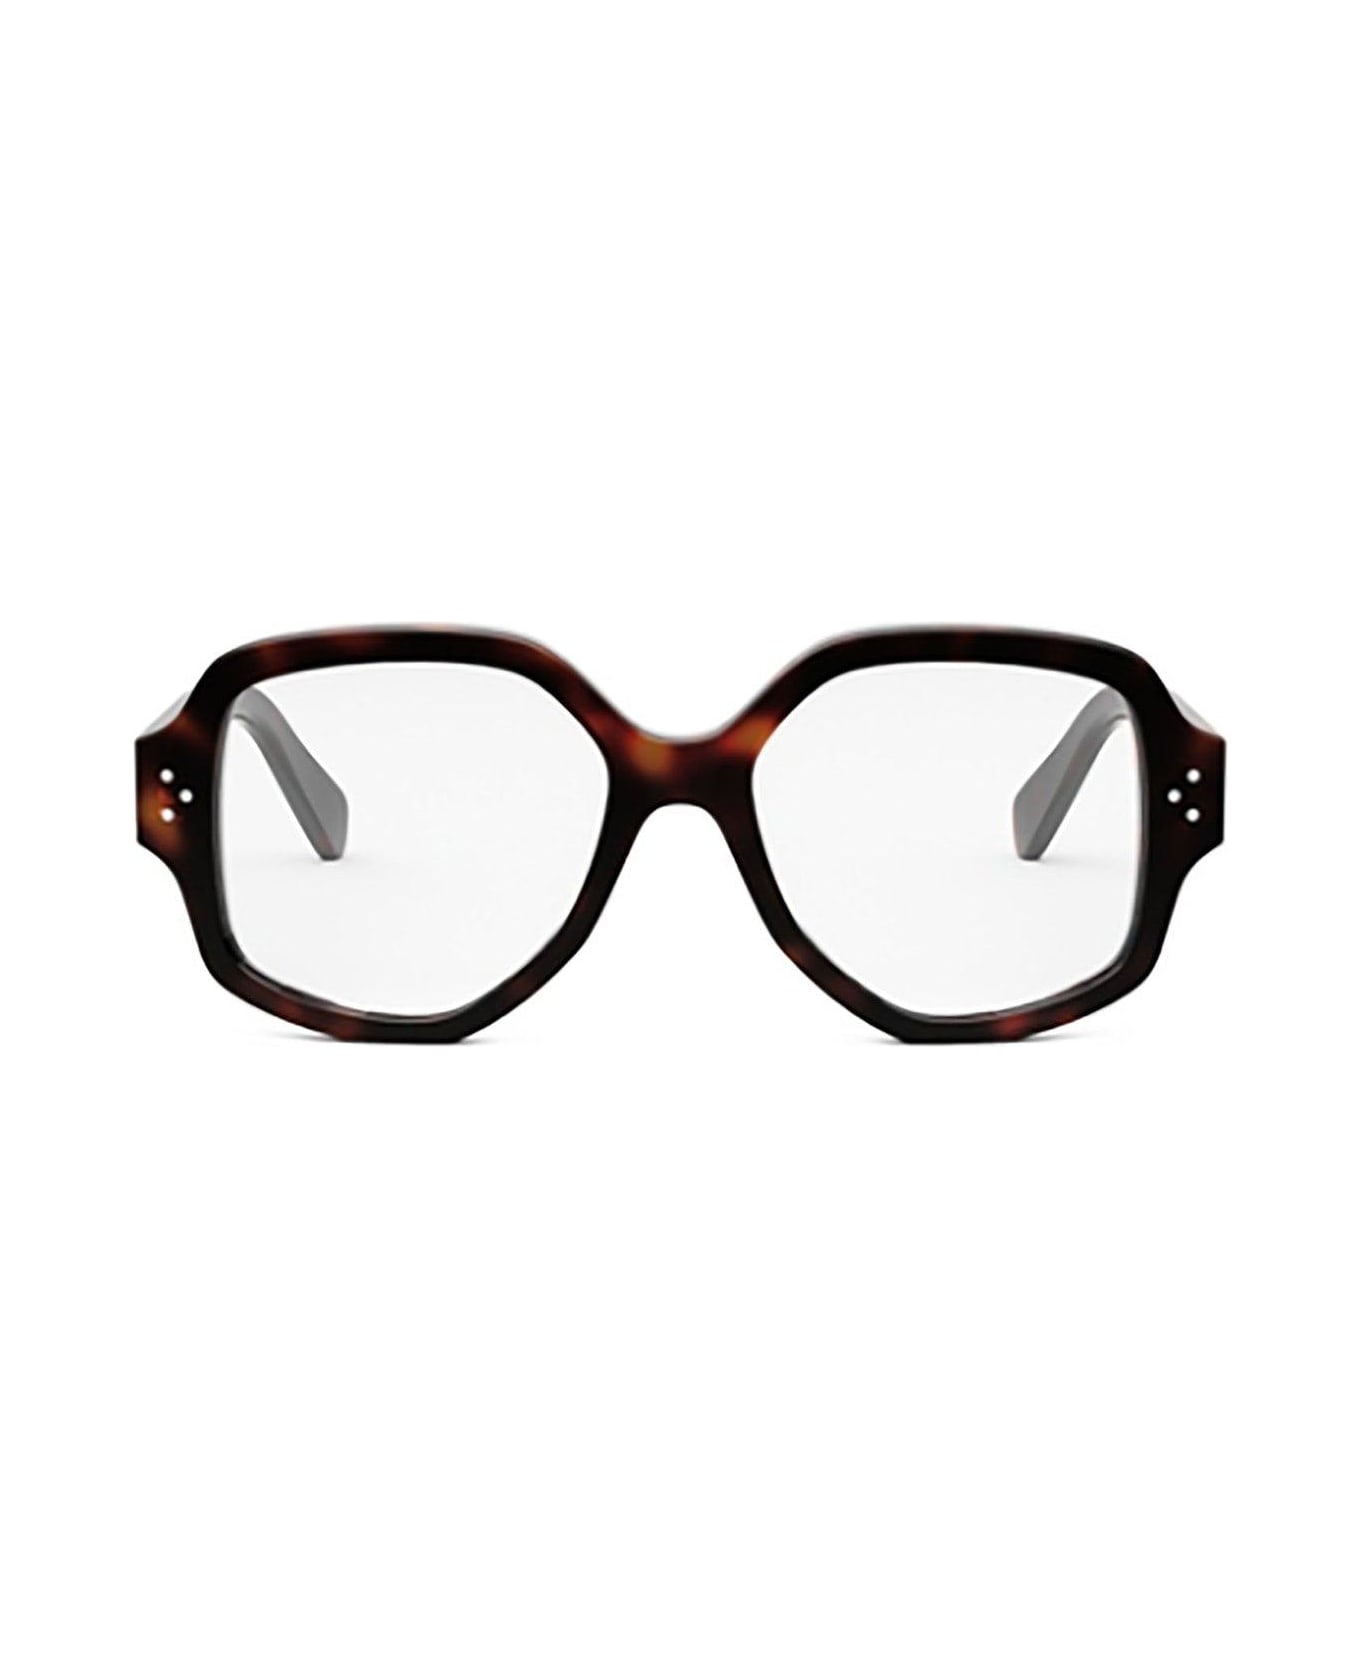 Celine Eyewear Squared Frame Glasses - 052